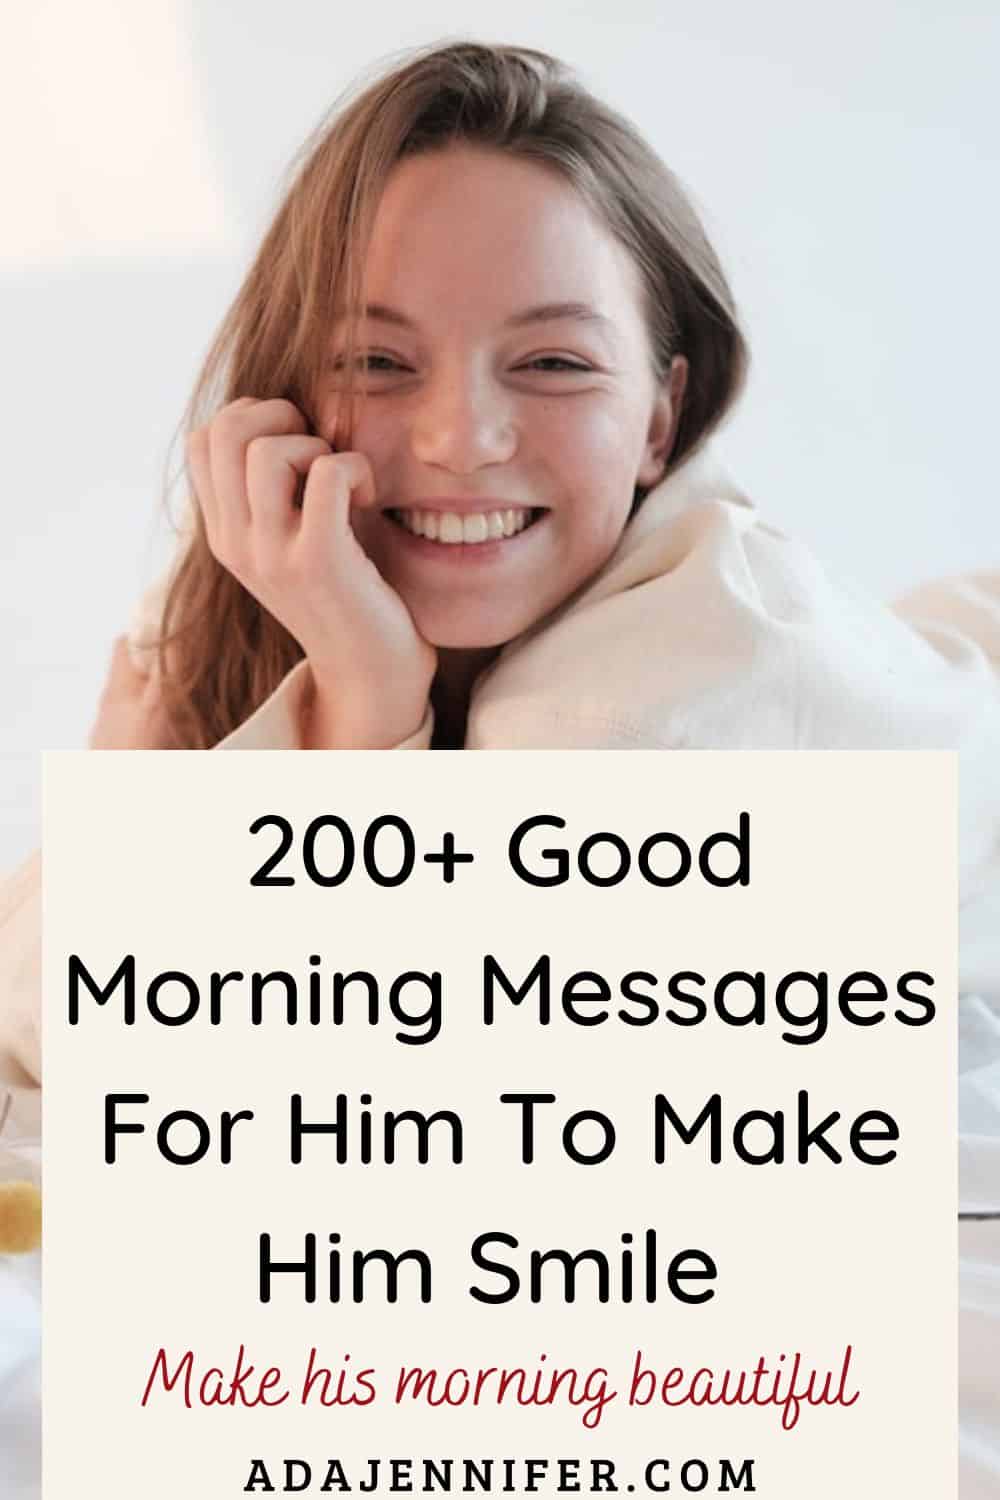 Good Morning Text To Make Him SmileGood Morning Text To Make Him Smile